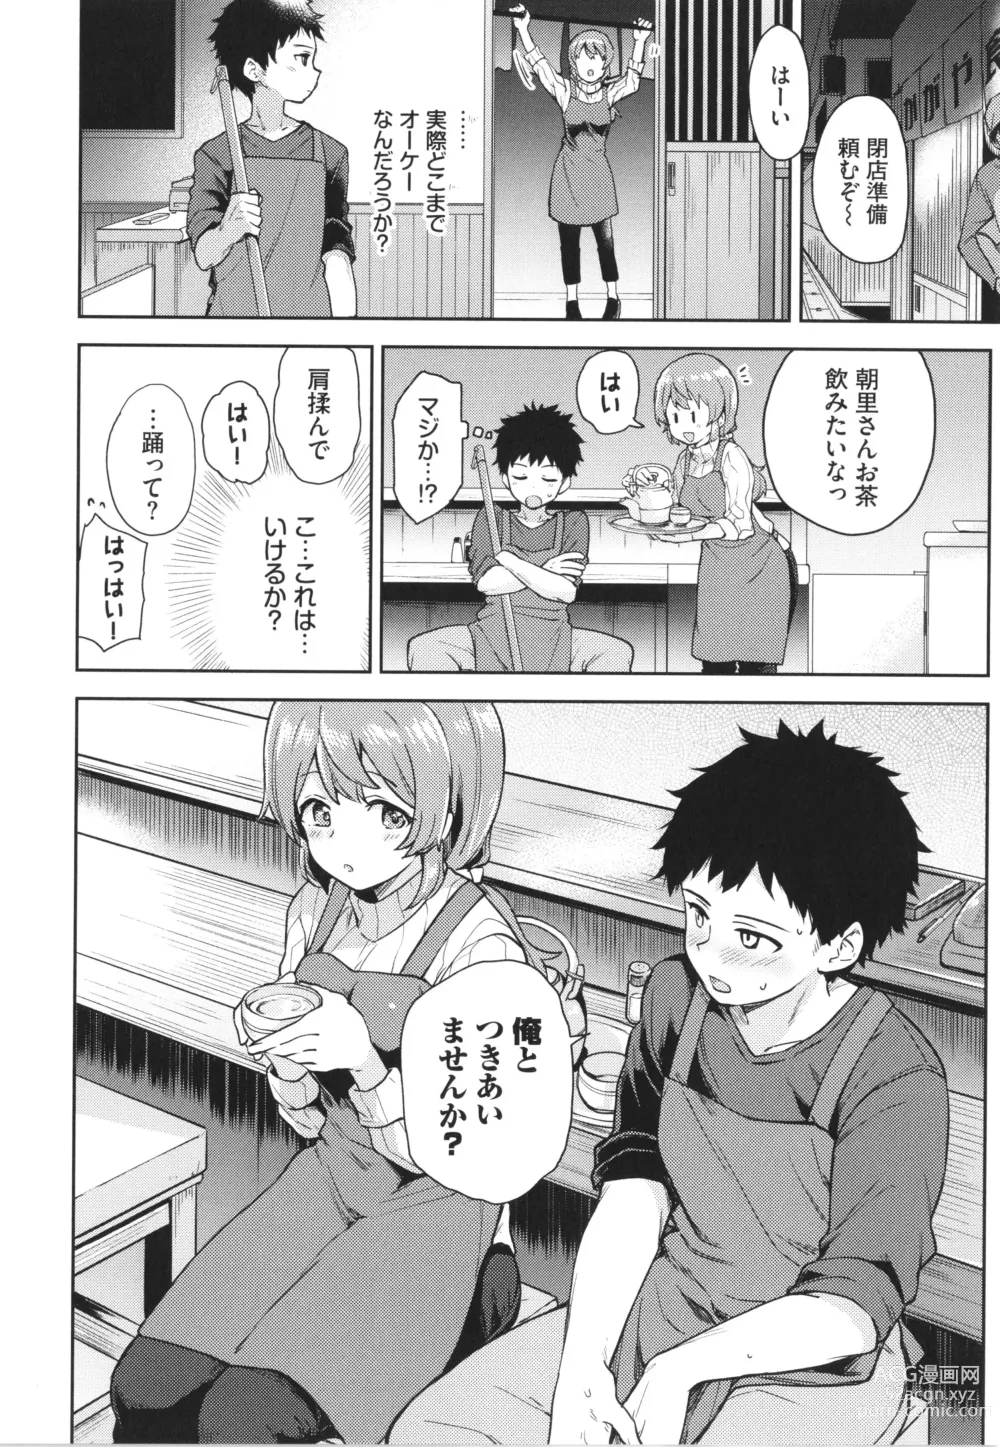 Page 173 of manga Secret Time